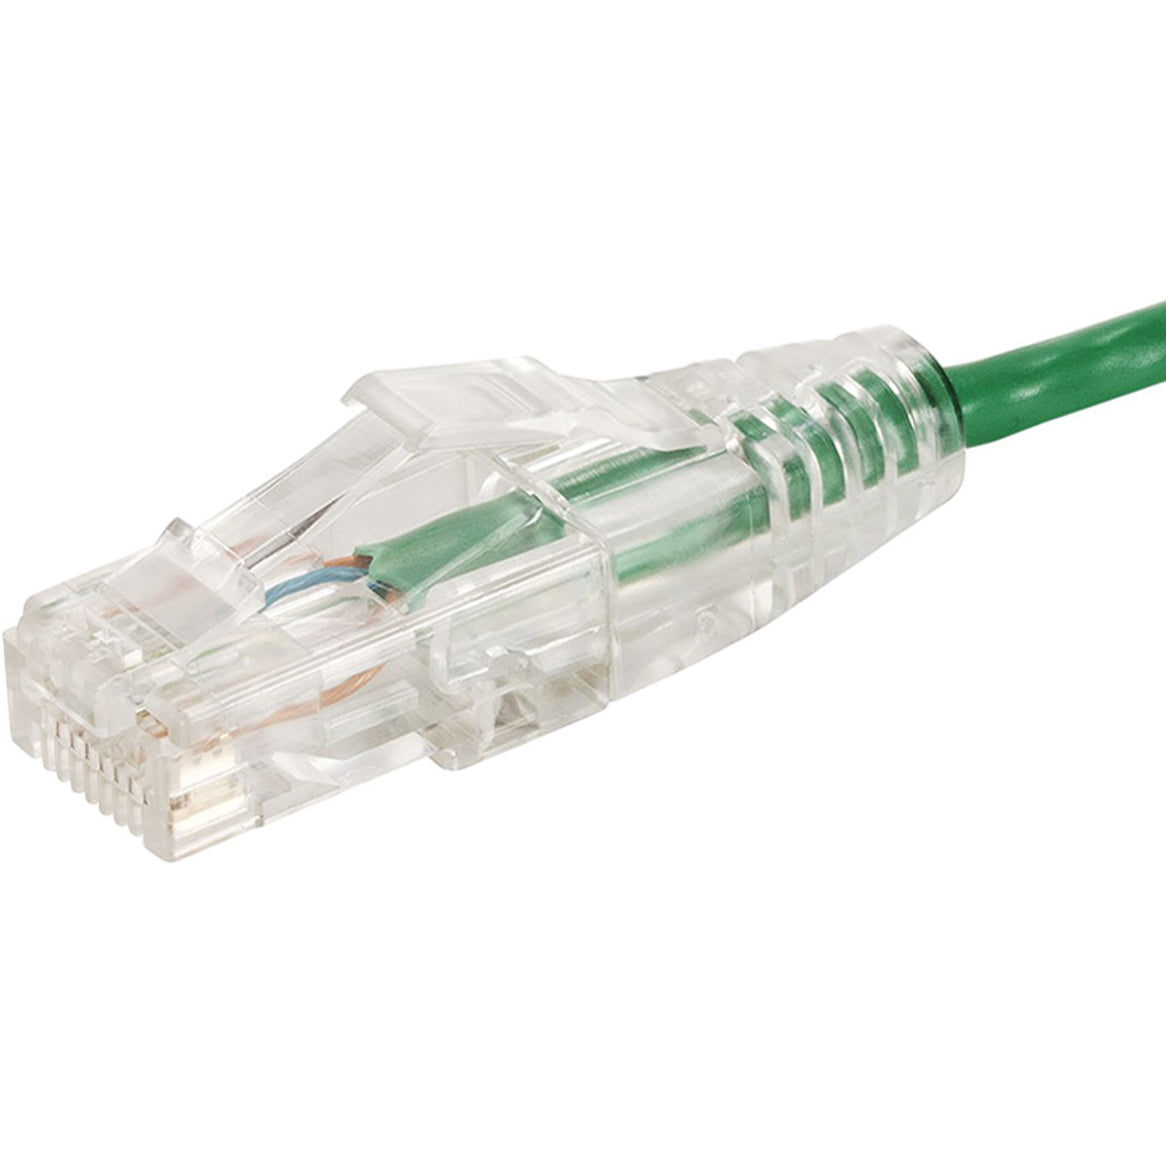 Monoprice 15208 SlimRun Cat6 28AWG UTP Ethernet Network Cable, 7ft Green, Flexible, Snagless